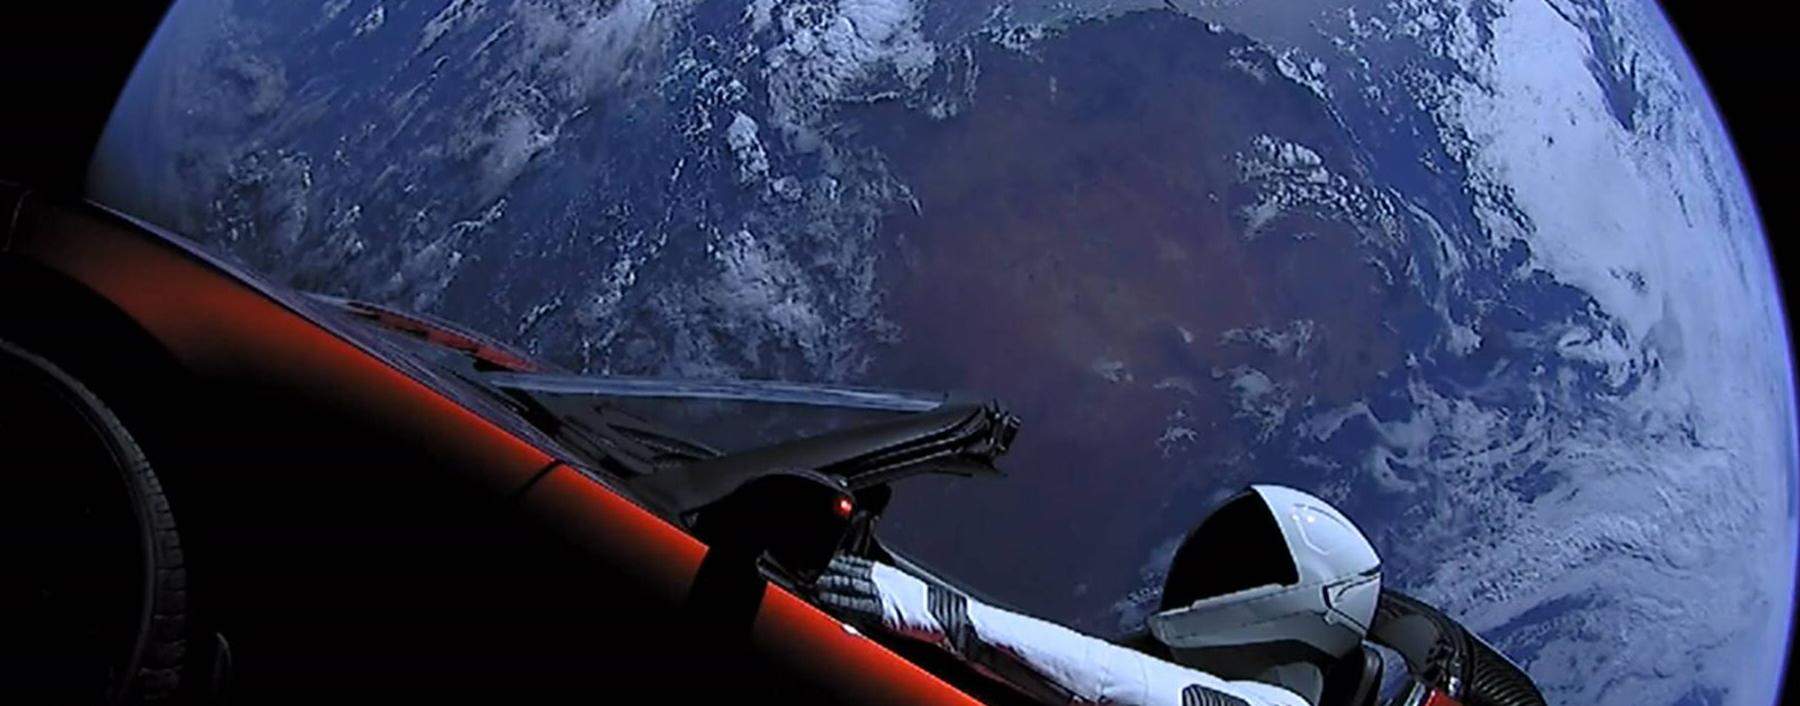 February 7 2018 California U S Art illustration Falcon Heavy Demo Mission with CEO Elon Musk